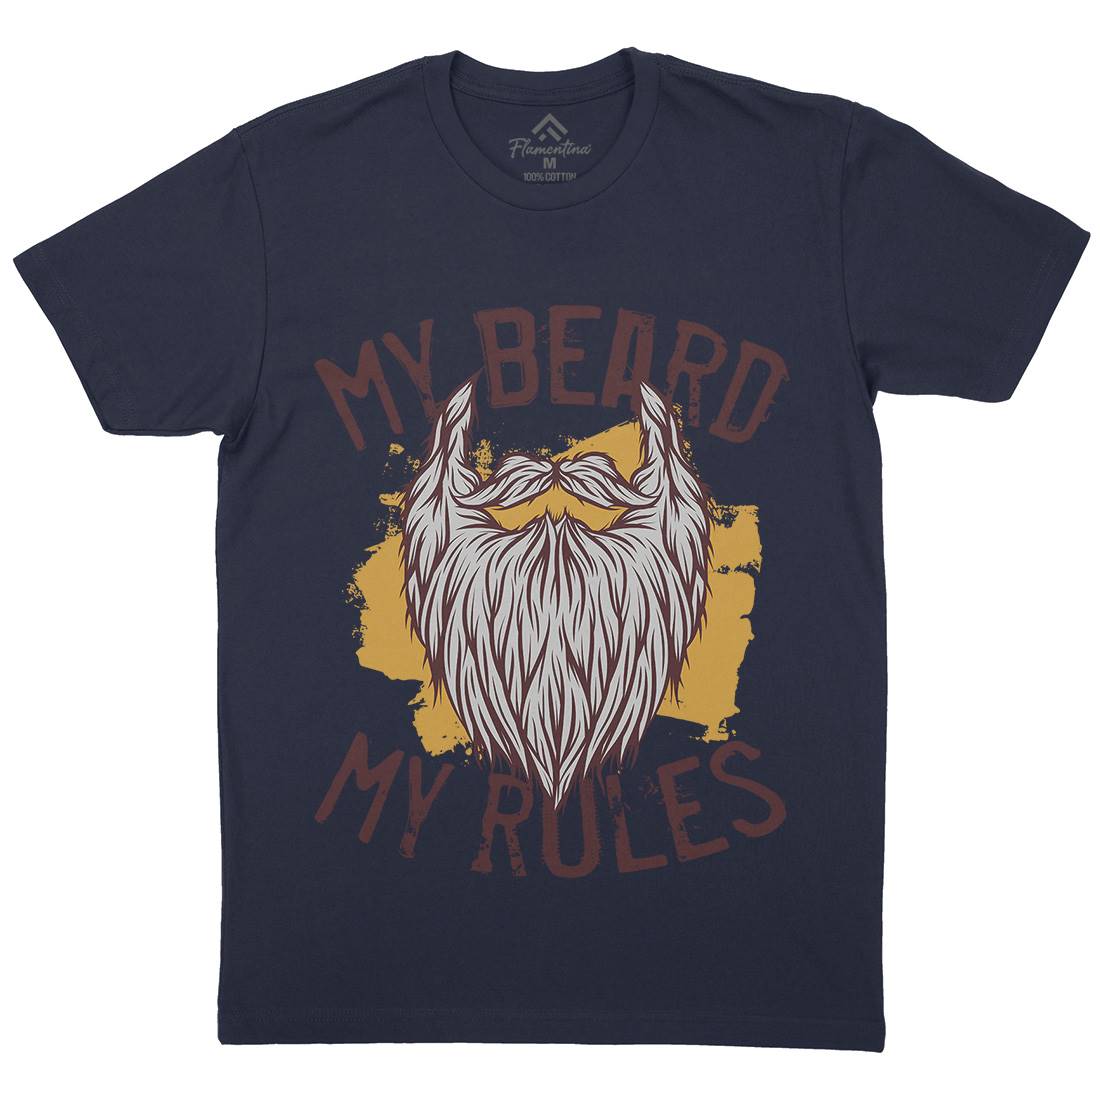 My Beard Rules Mens Organic Crew Neck T-Shirt Barber C808